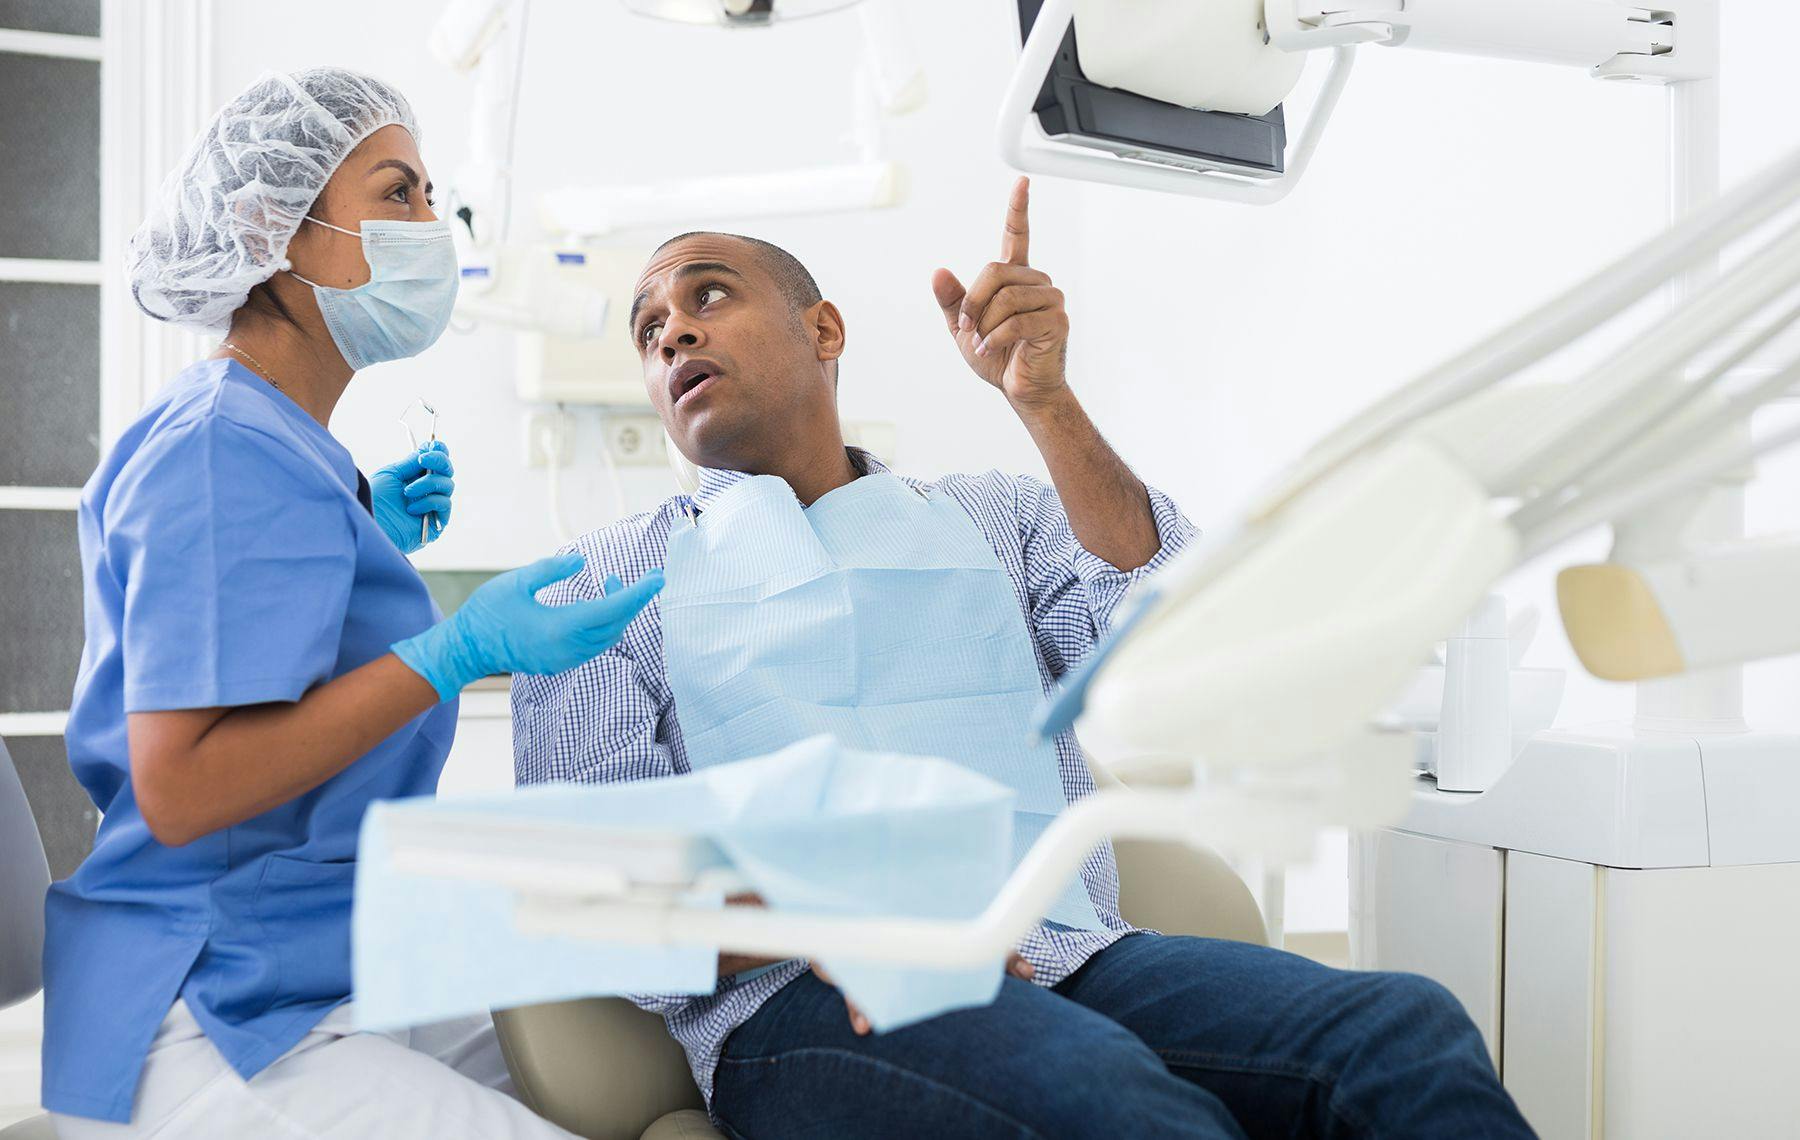 Hygienist Explaining x-rays to a dental patient | Image Credit: © Jack F / stock.adobe.com